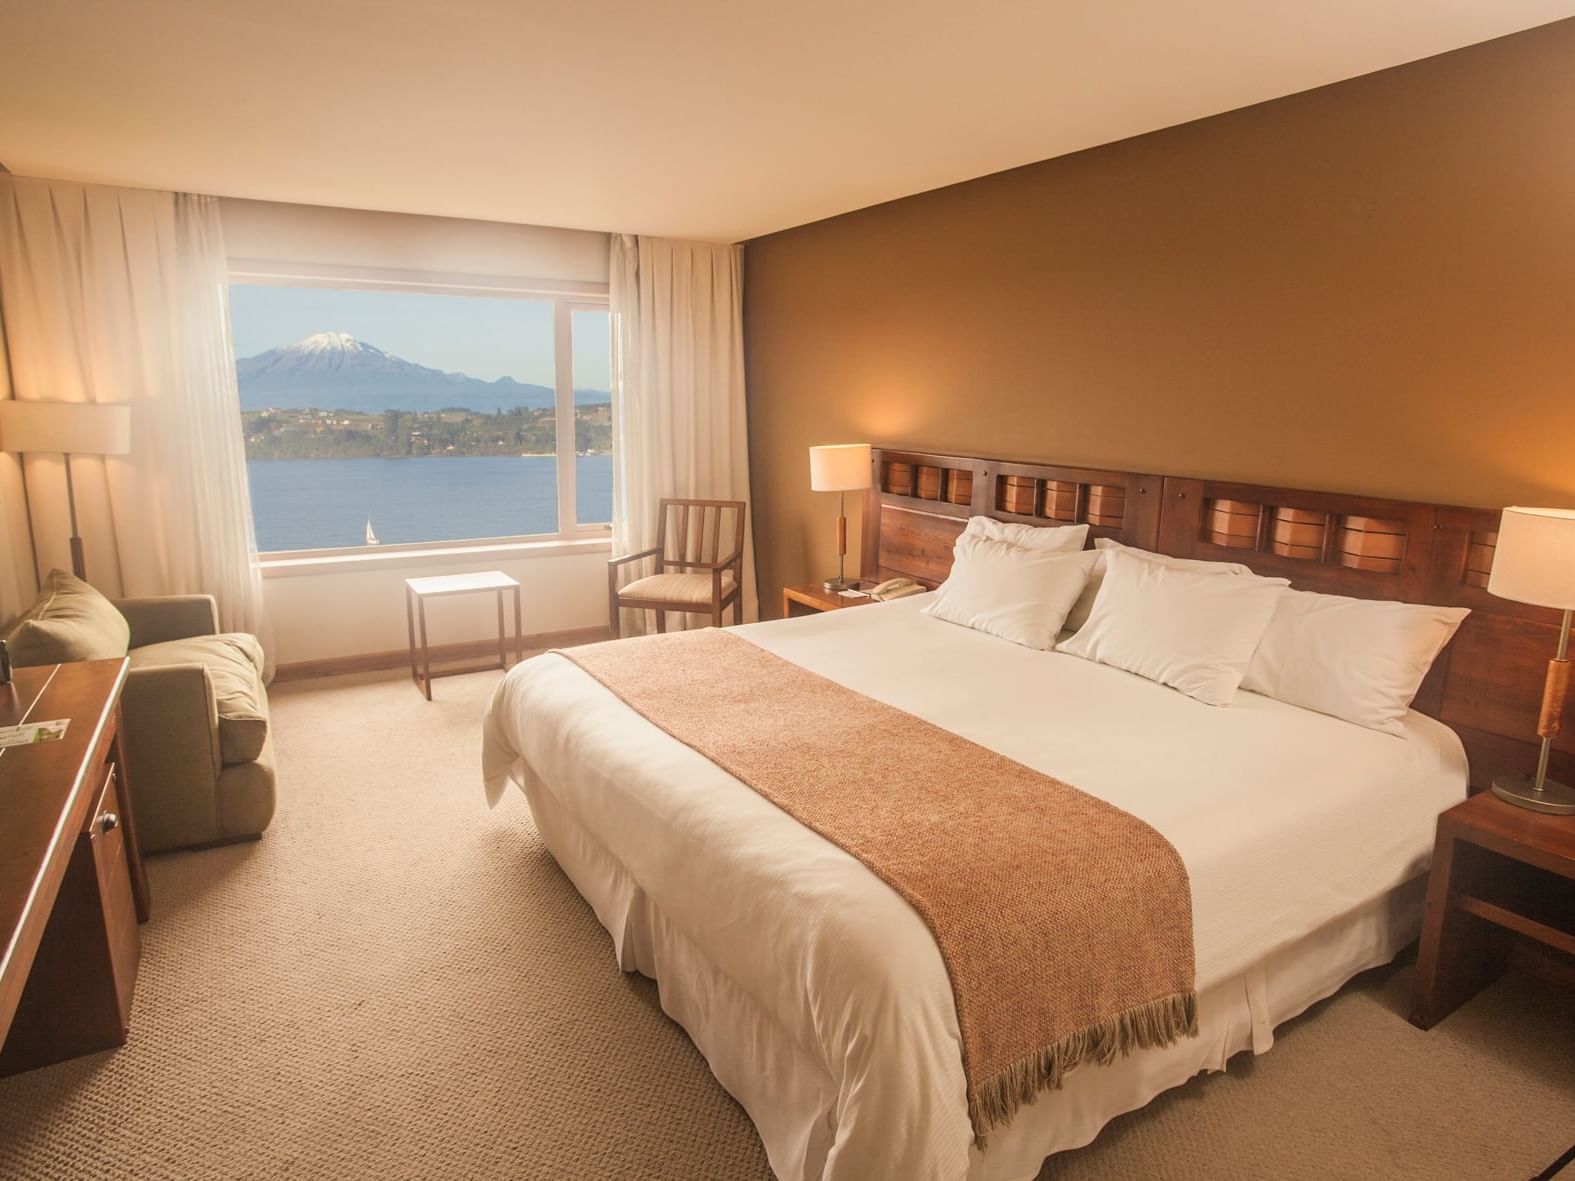 Superior Room at Cumbres Puerto Varas Hotel